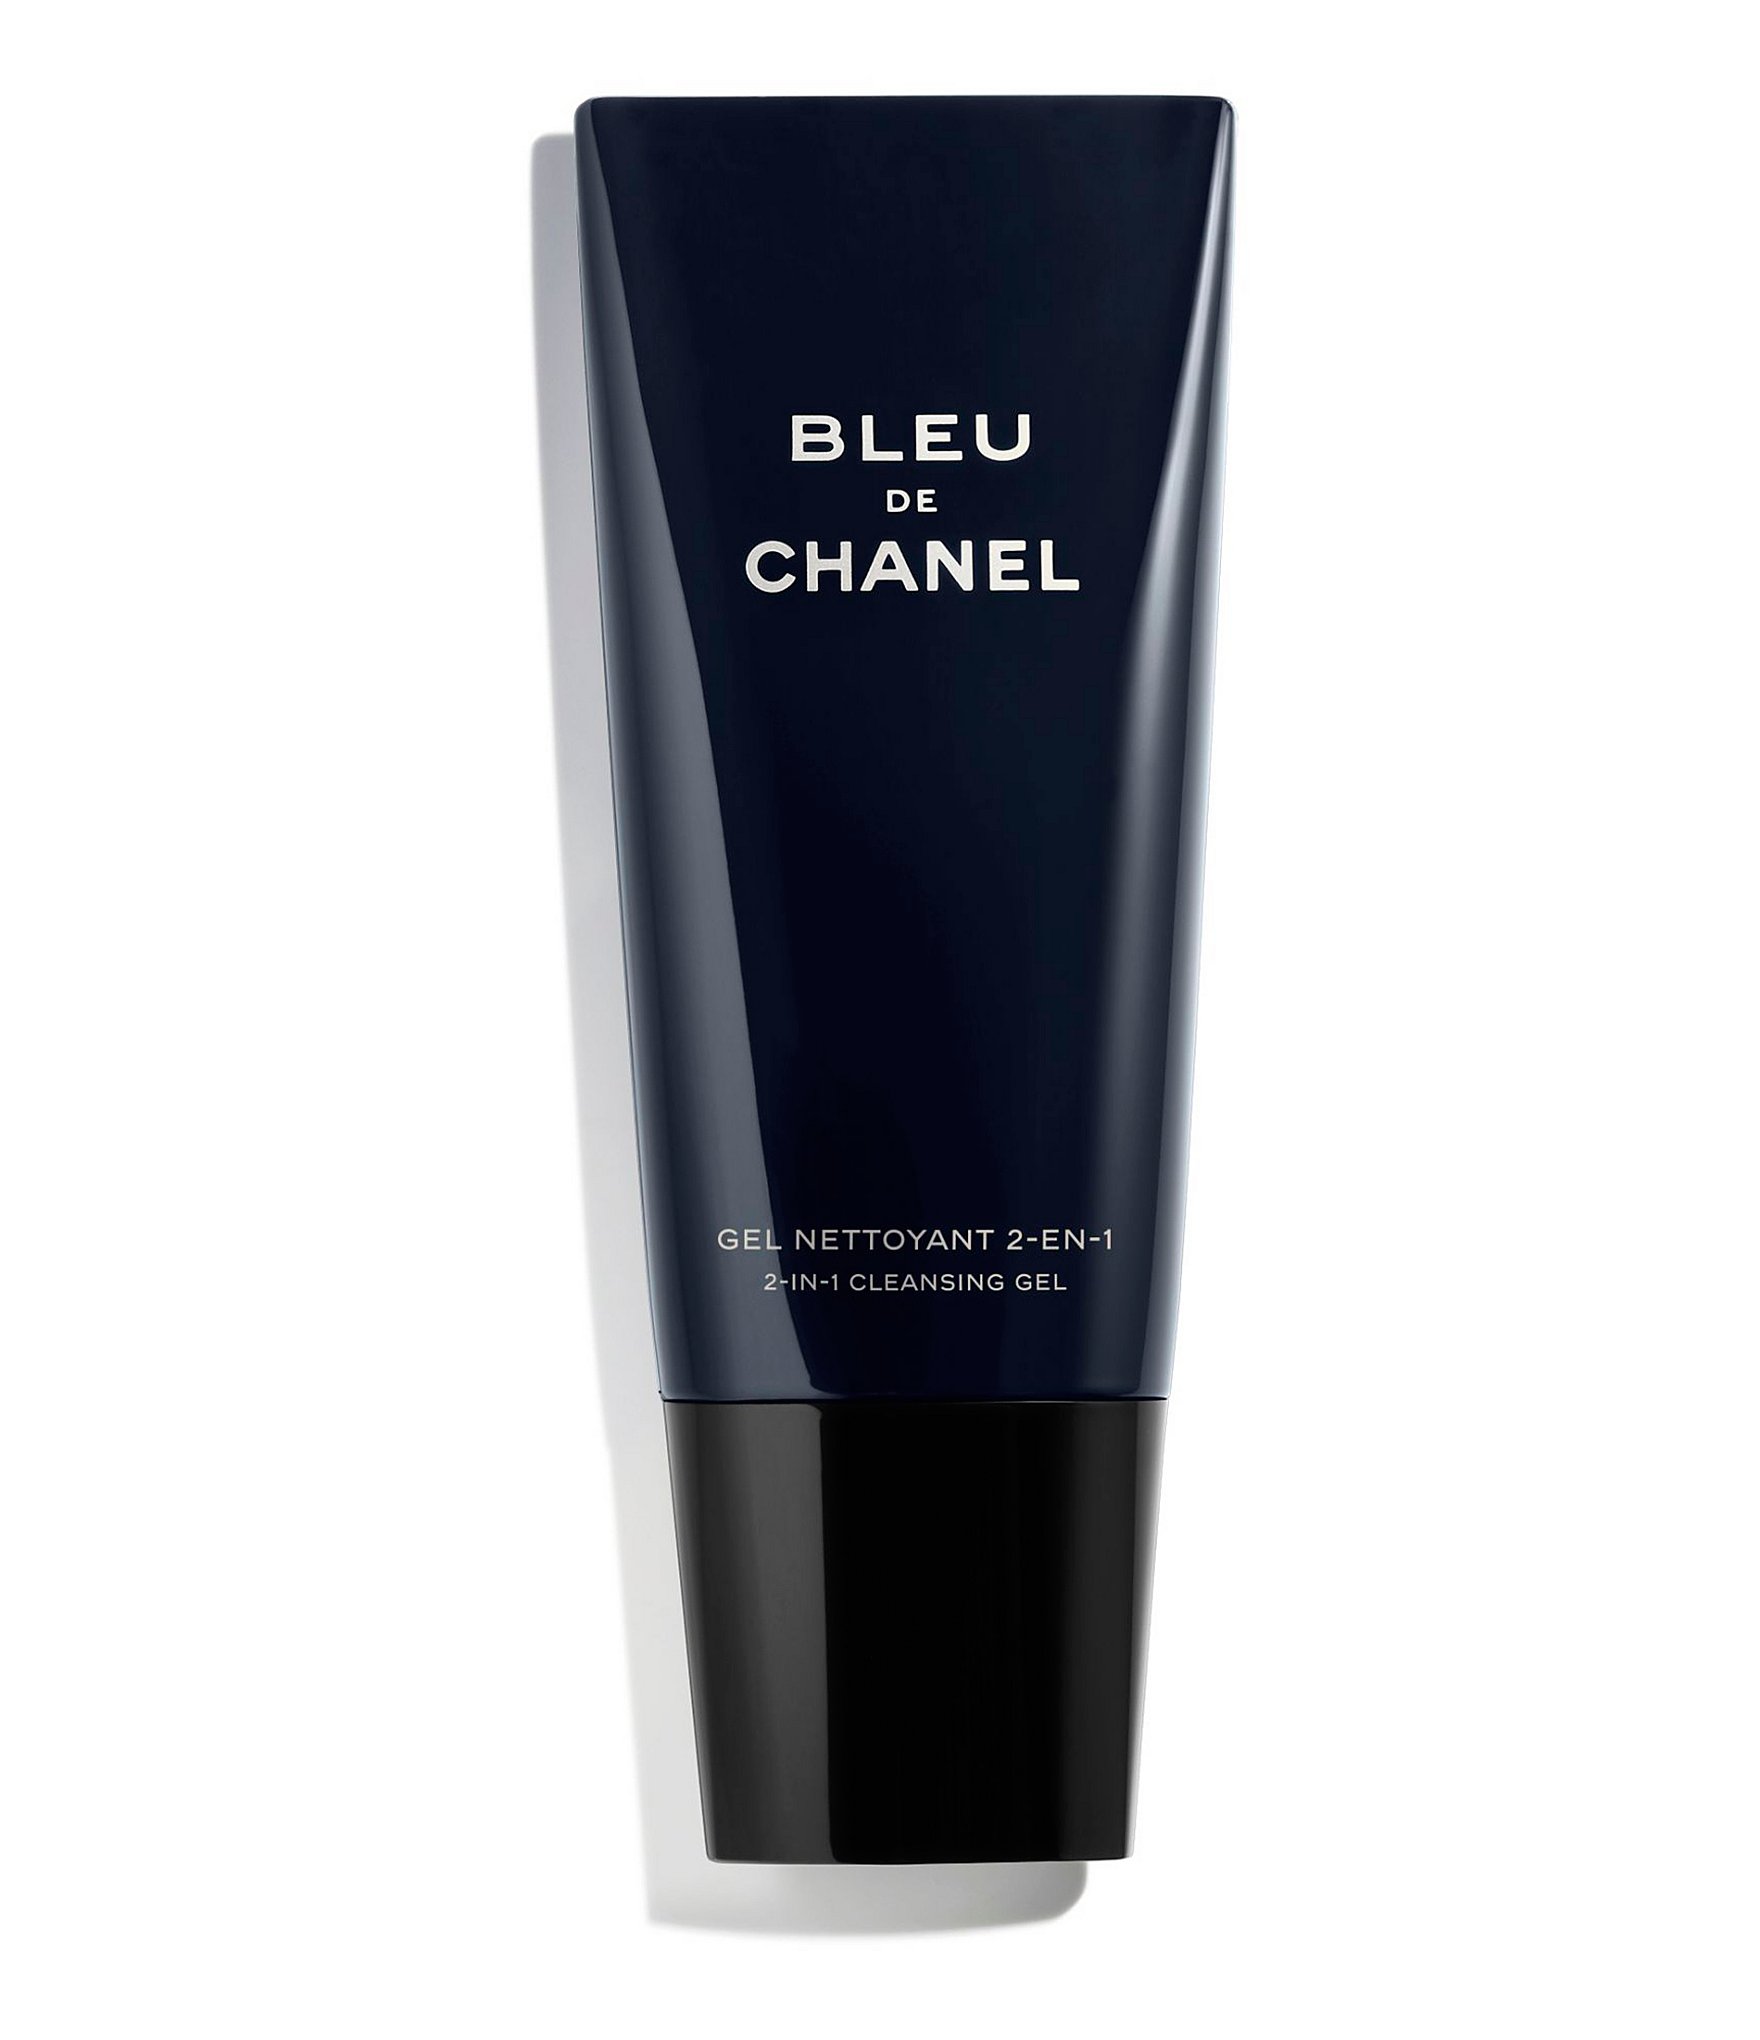 Chanel Skincare